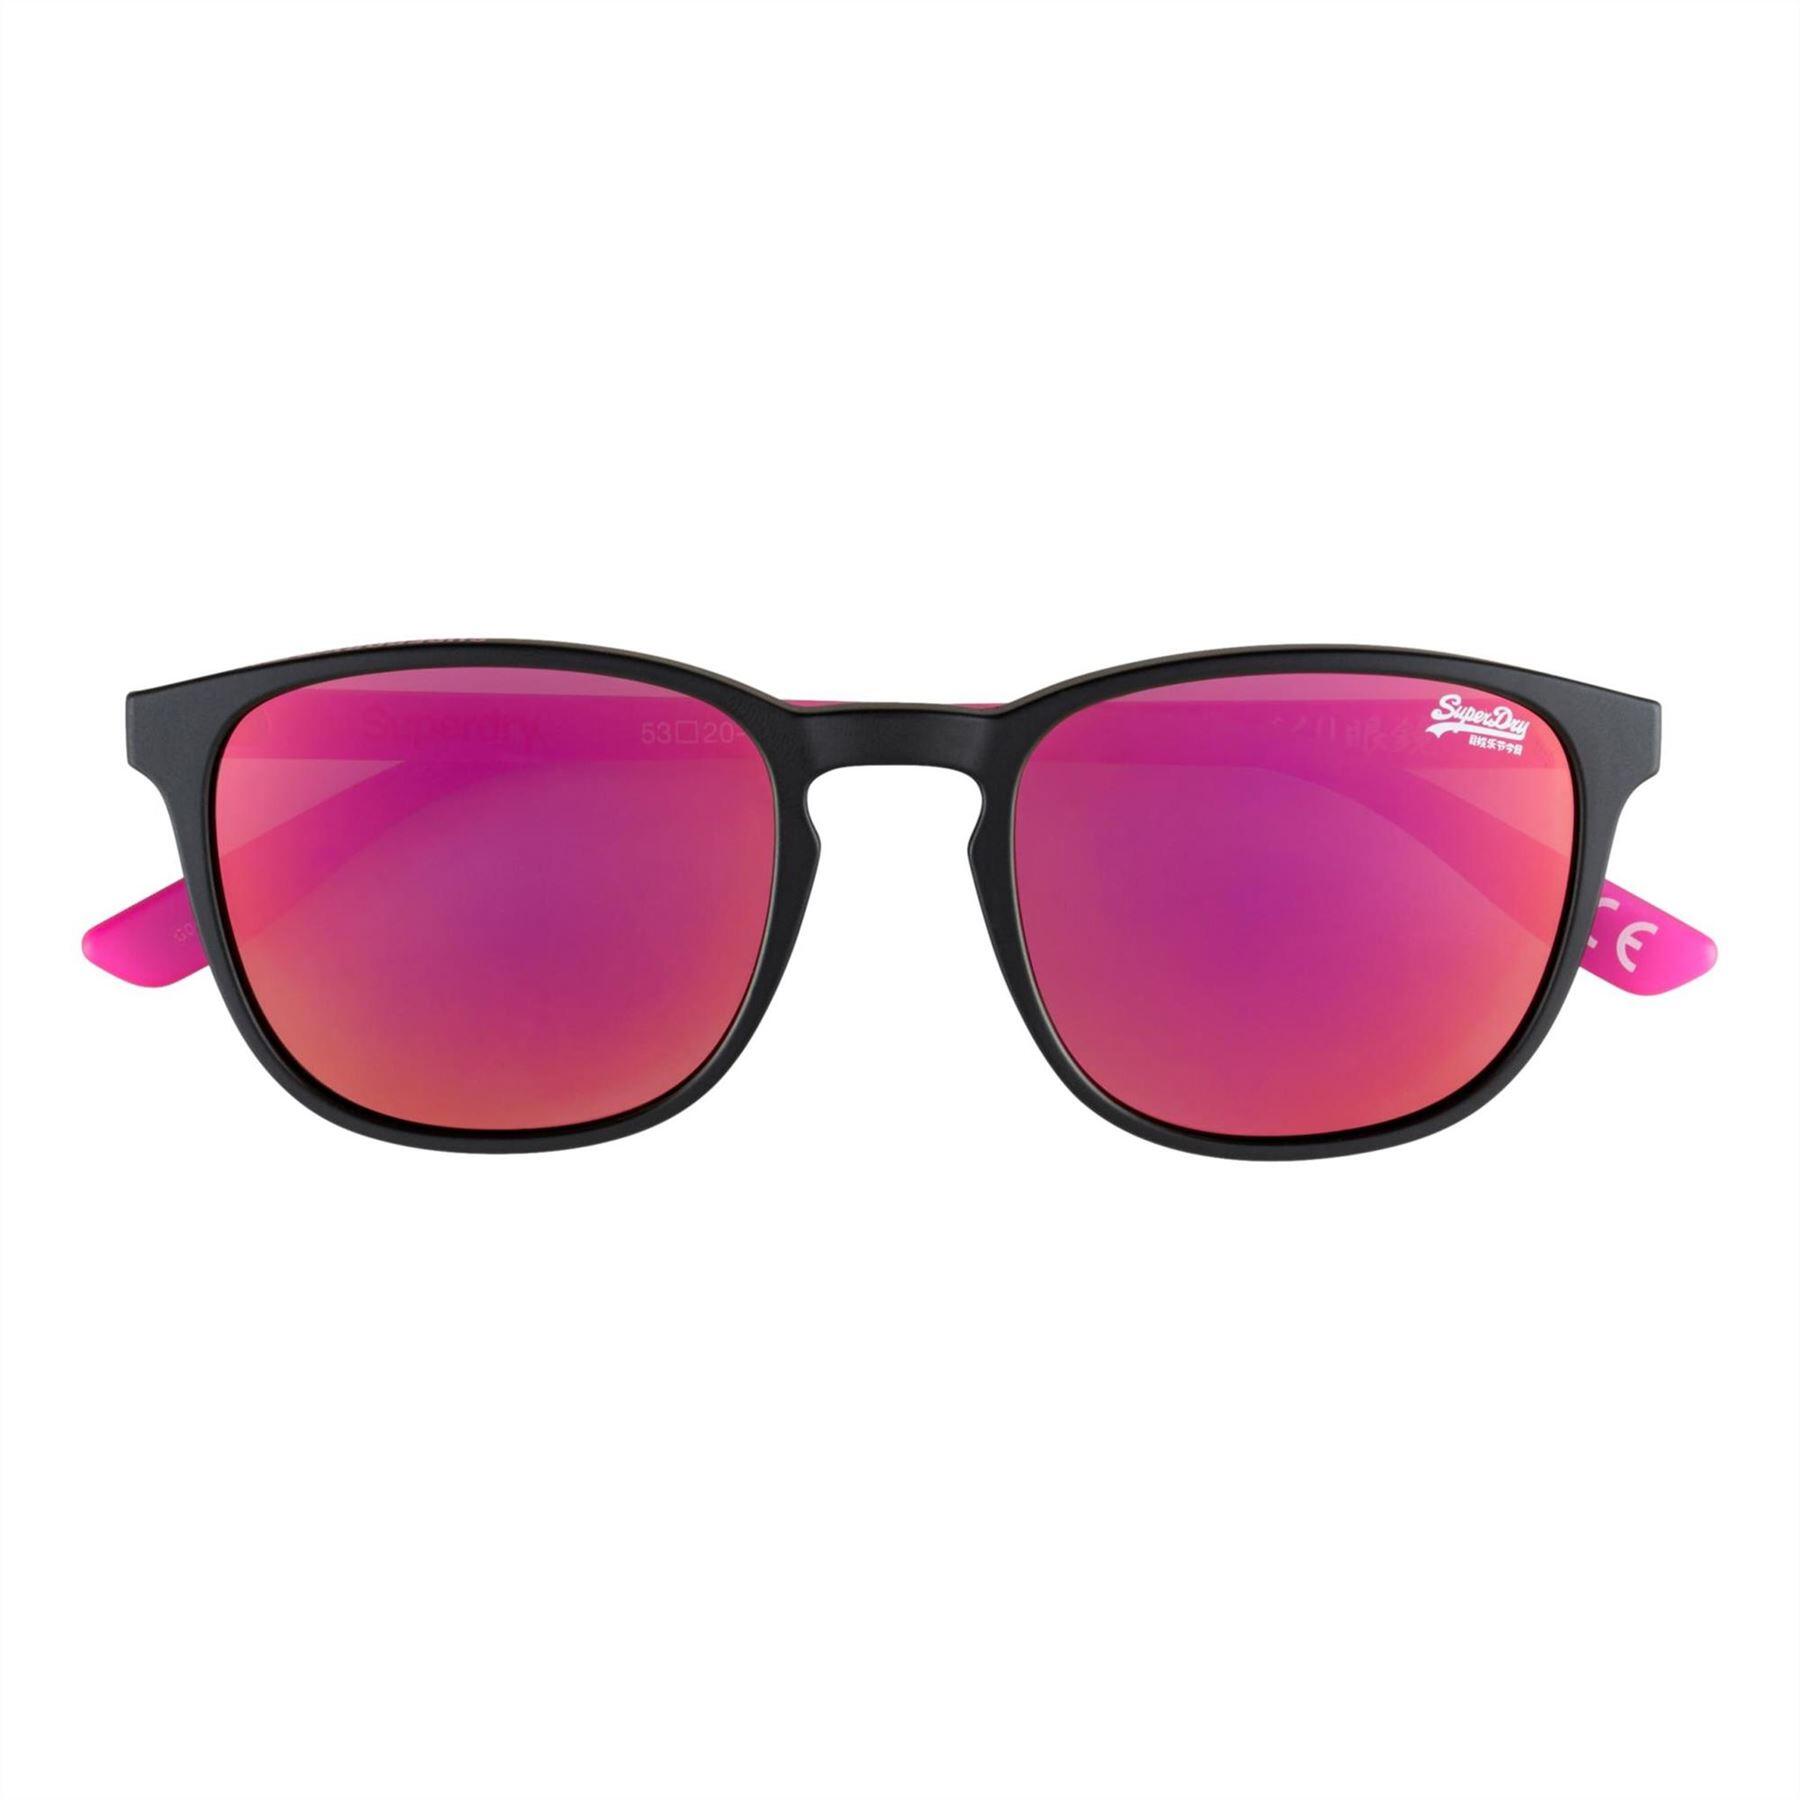 SUPERDRY Superdry Summer 6 Sunglasses - Pink / Black